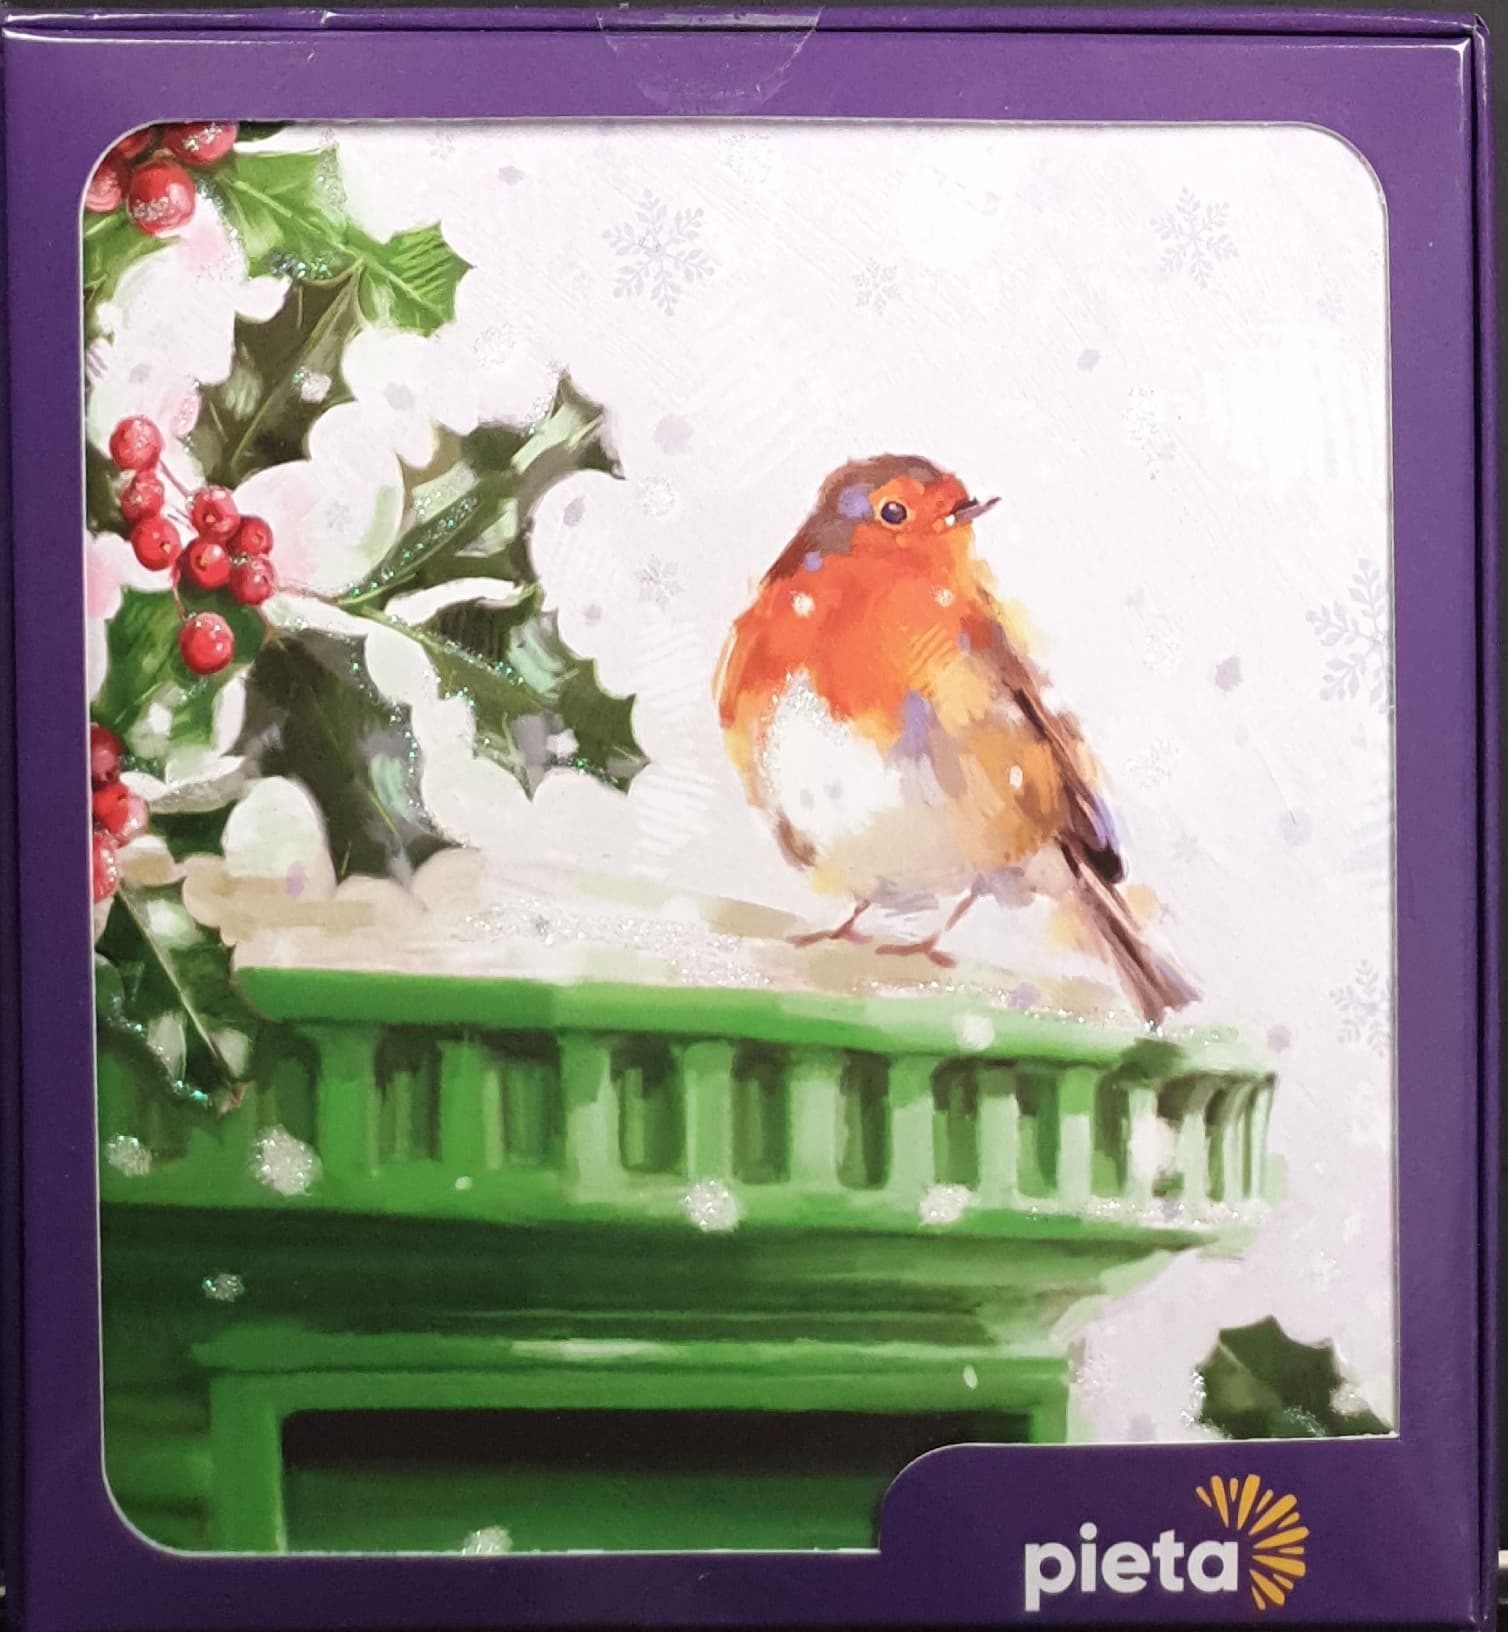 Charity Christmas Card (In Irish & English) - Box of 16 / Pieta - Robin on Post Box & Holly